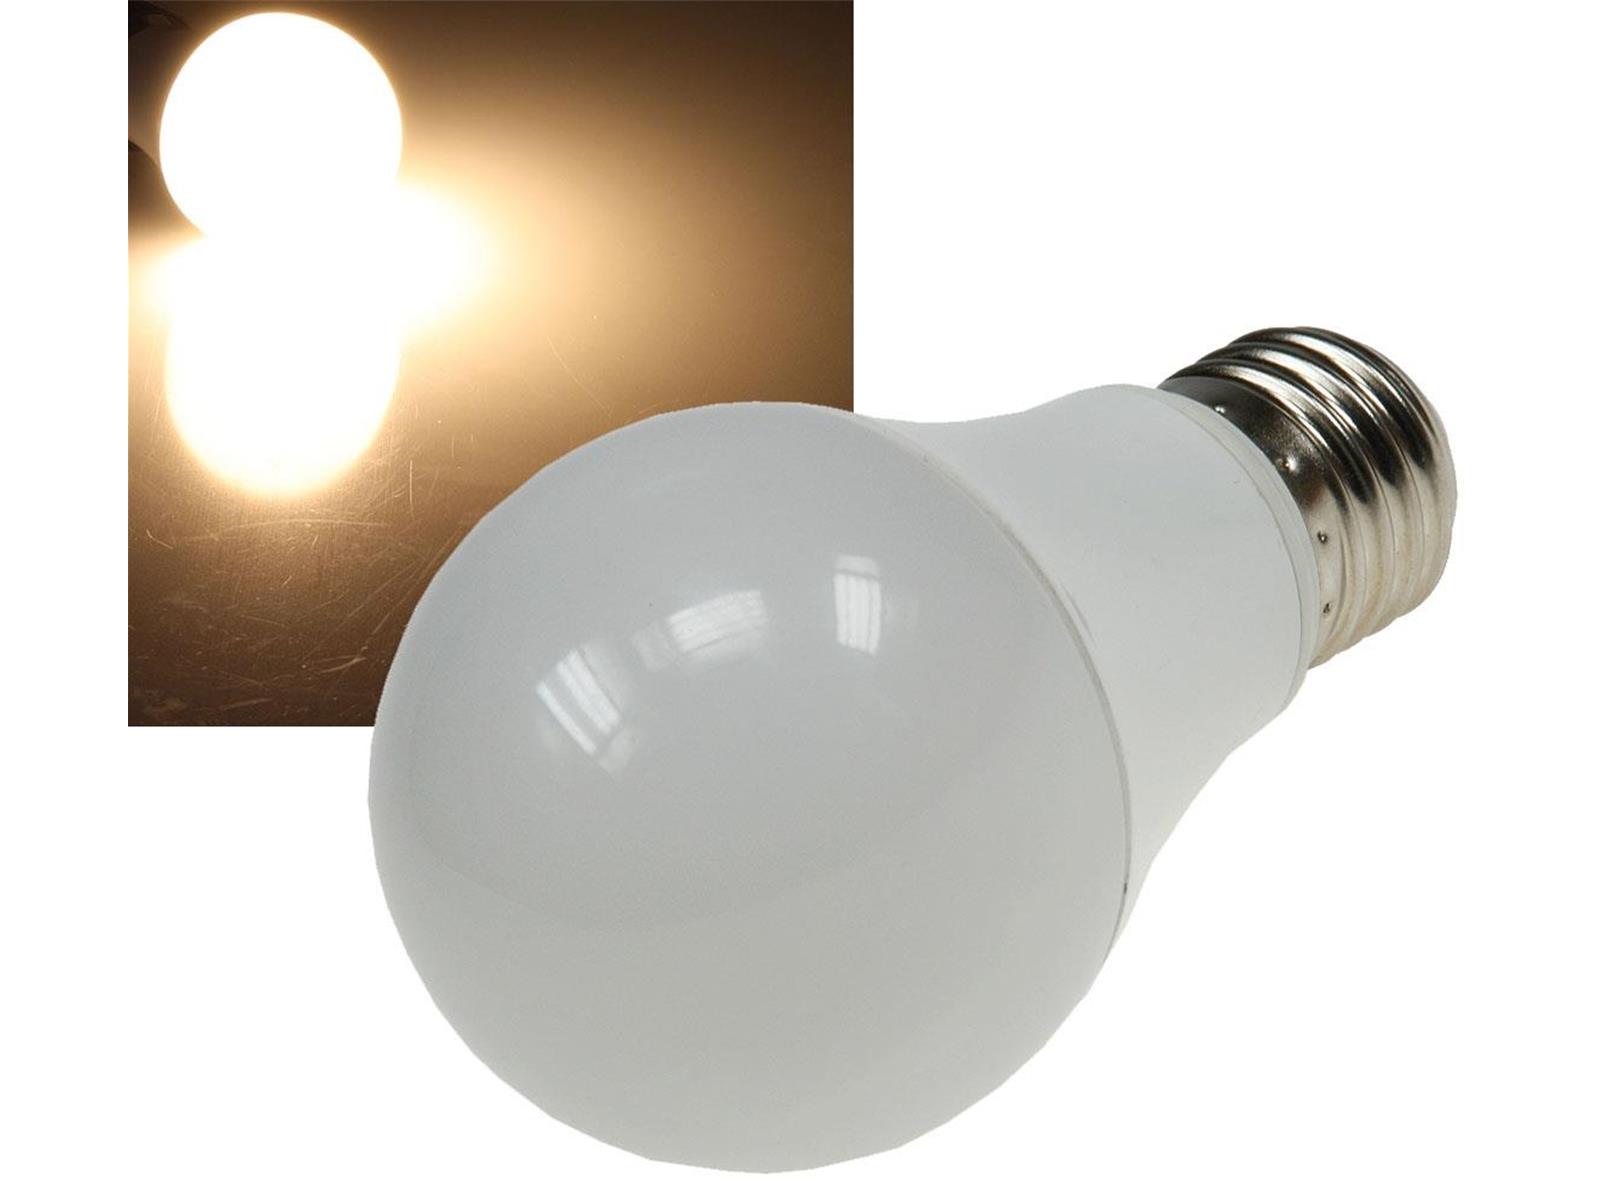 LED Glühlampe E27 "G70 AGL" warmweiß3000k, 930lm, 230V/10W, 160°